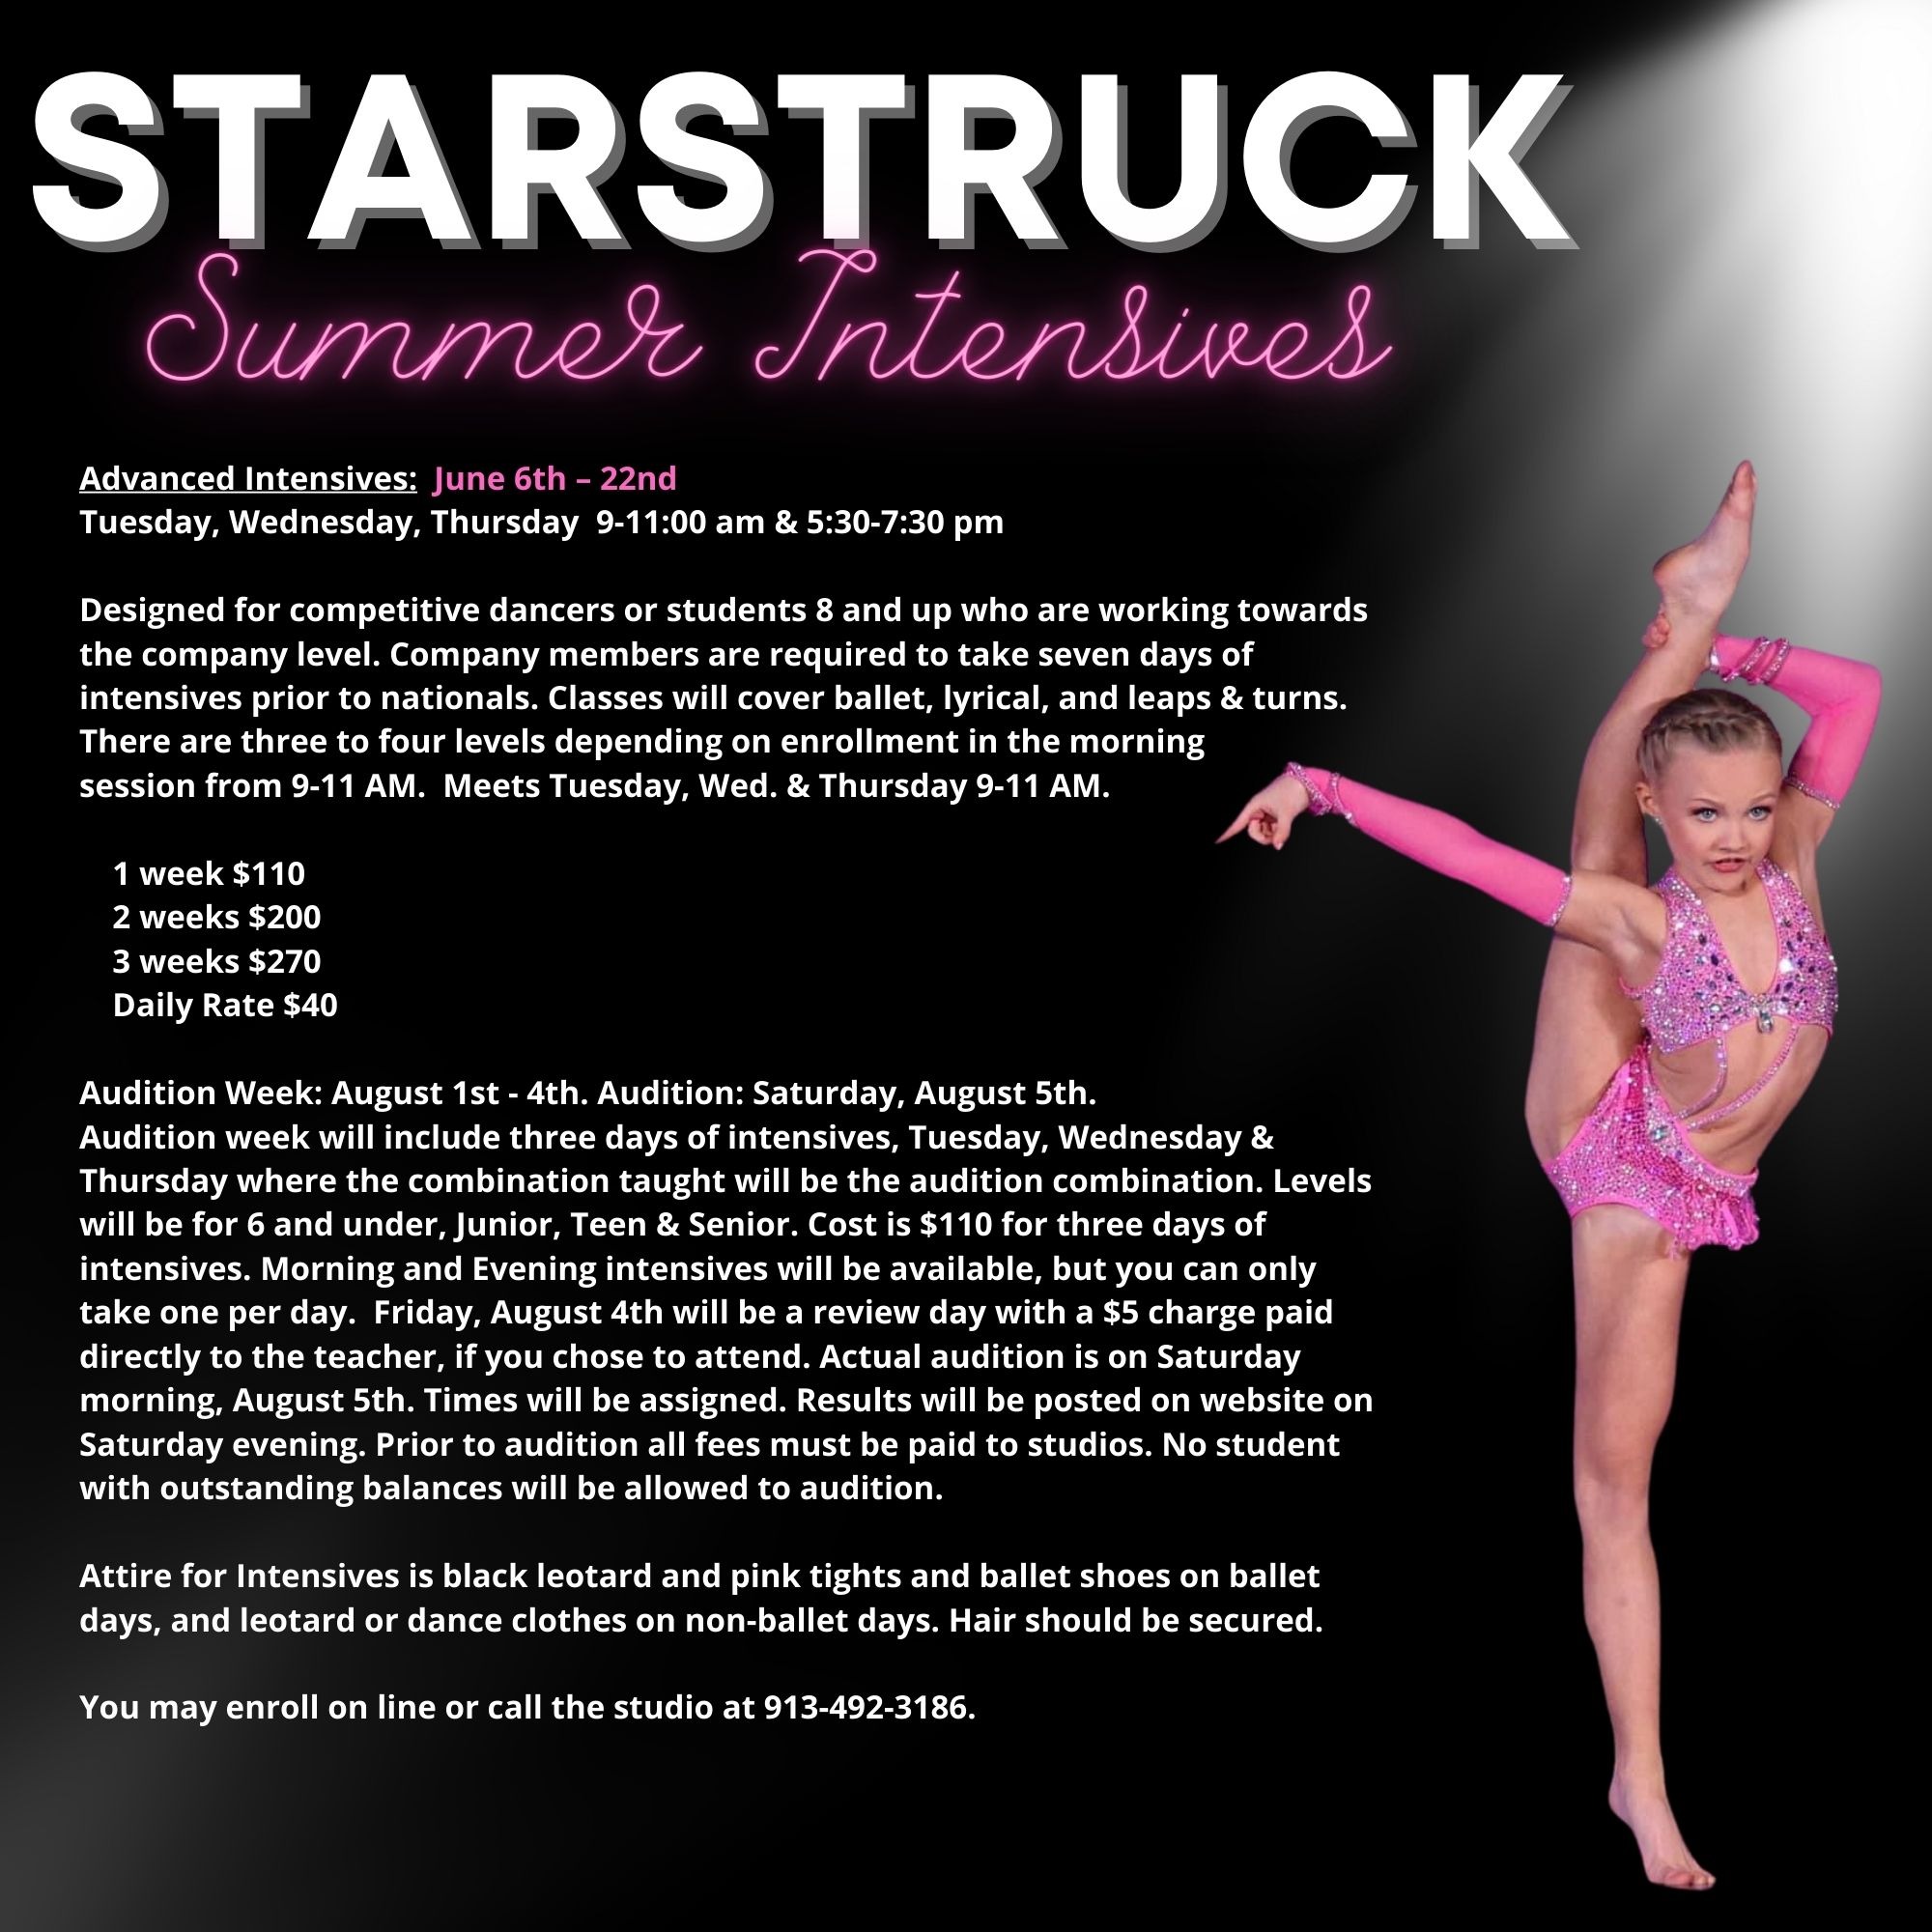 Starstruck Performing Arts Academy group Summer Intensives Info